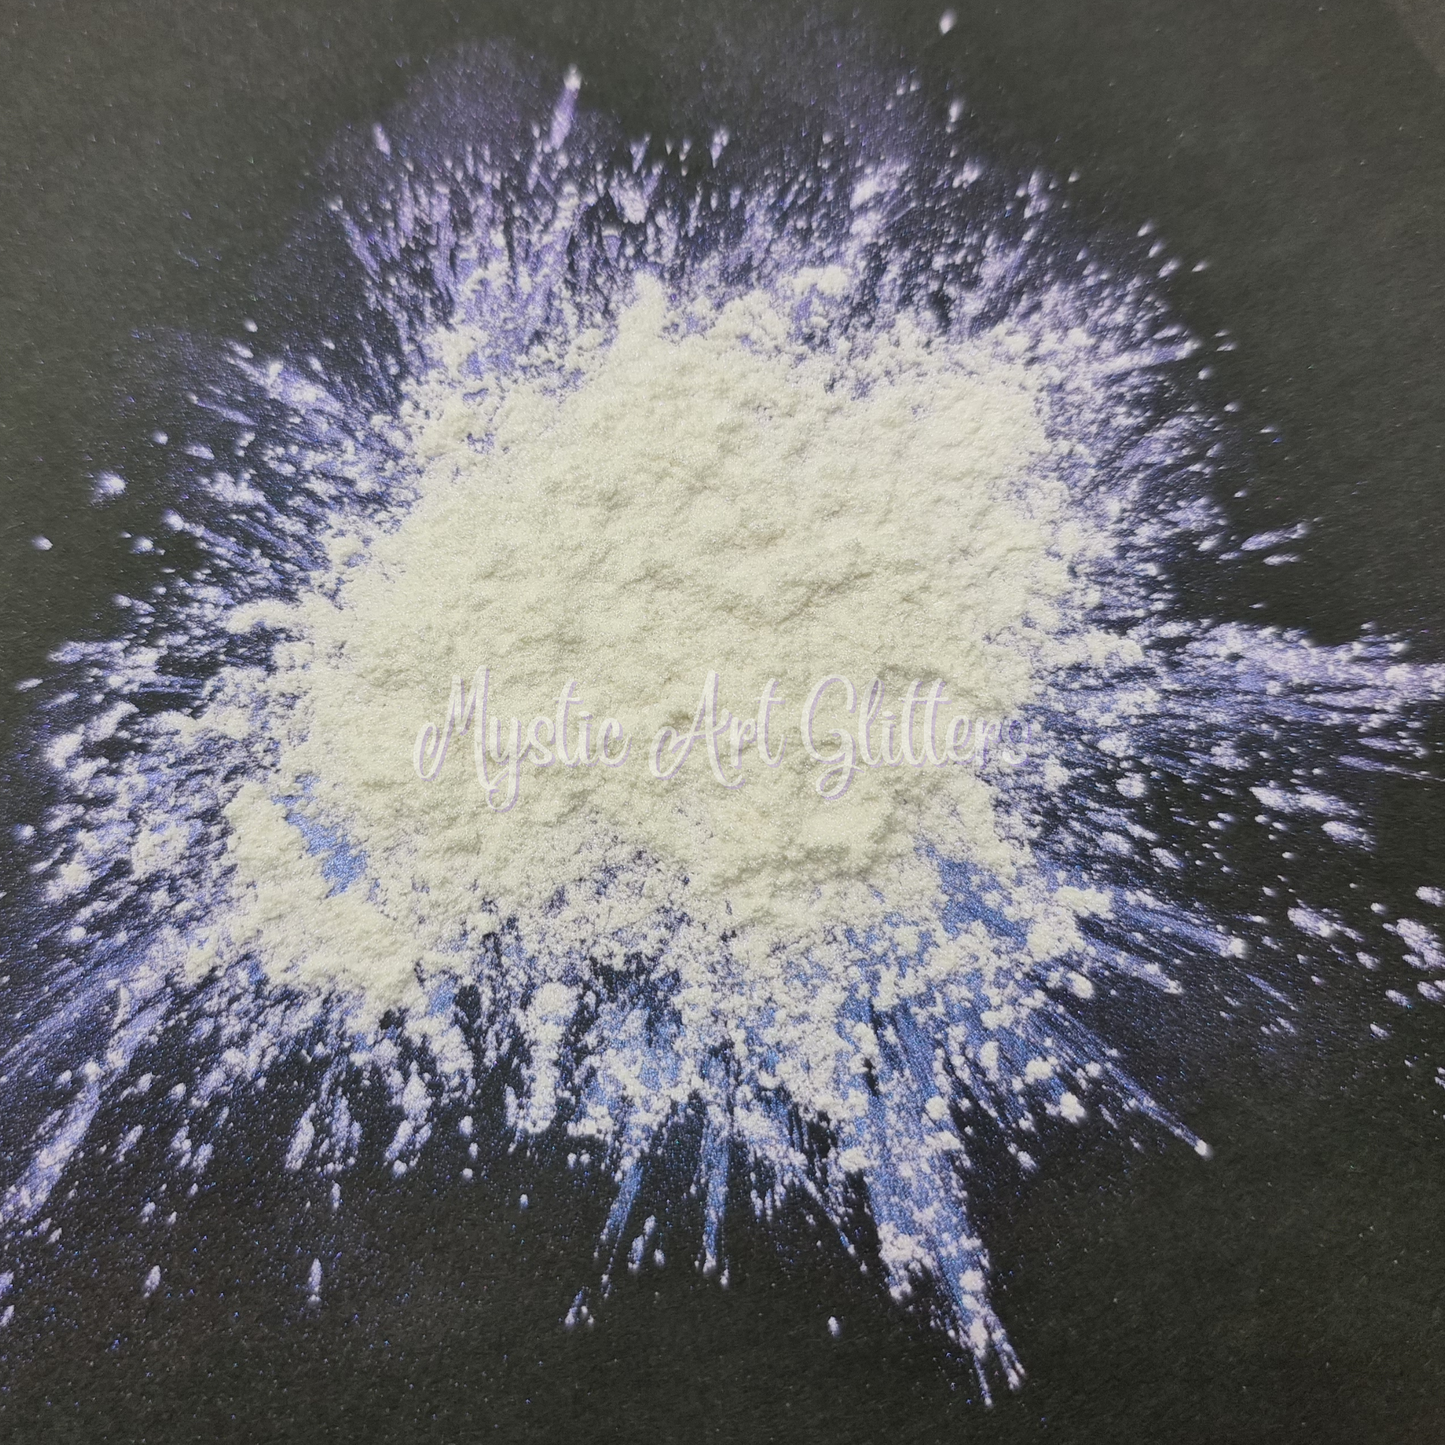 Interference Mica Powder White to Blue 14gm - Mystic Art Glitters